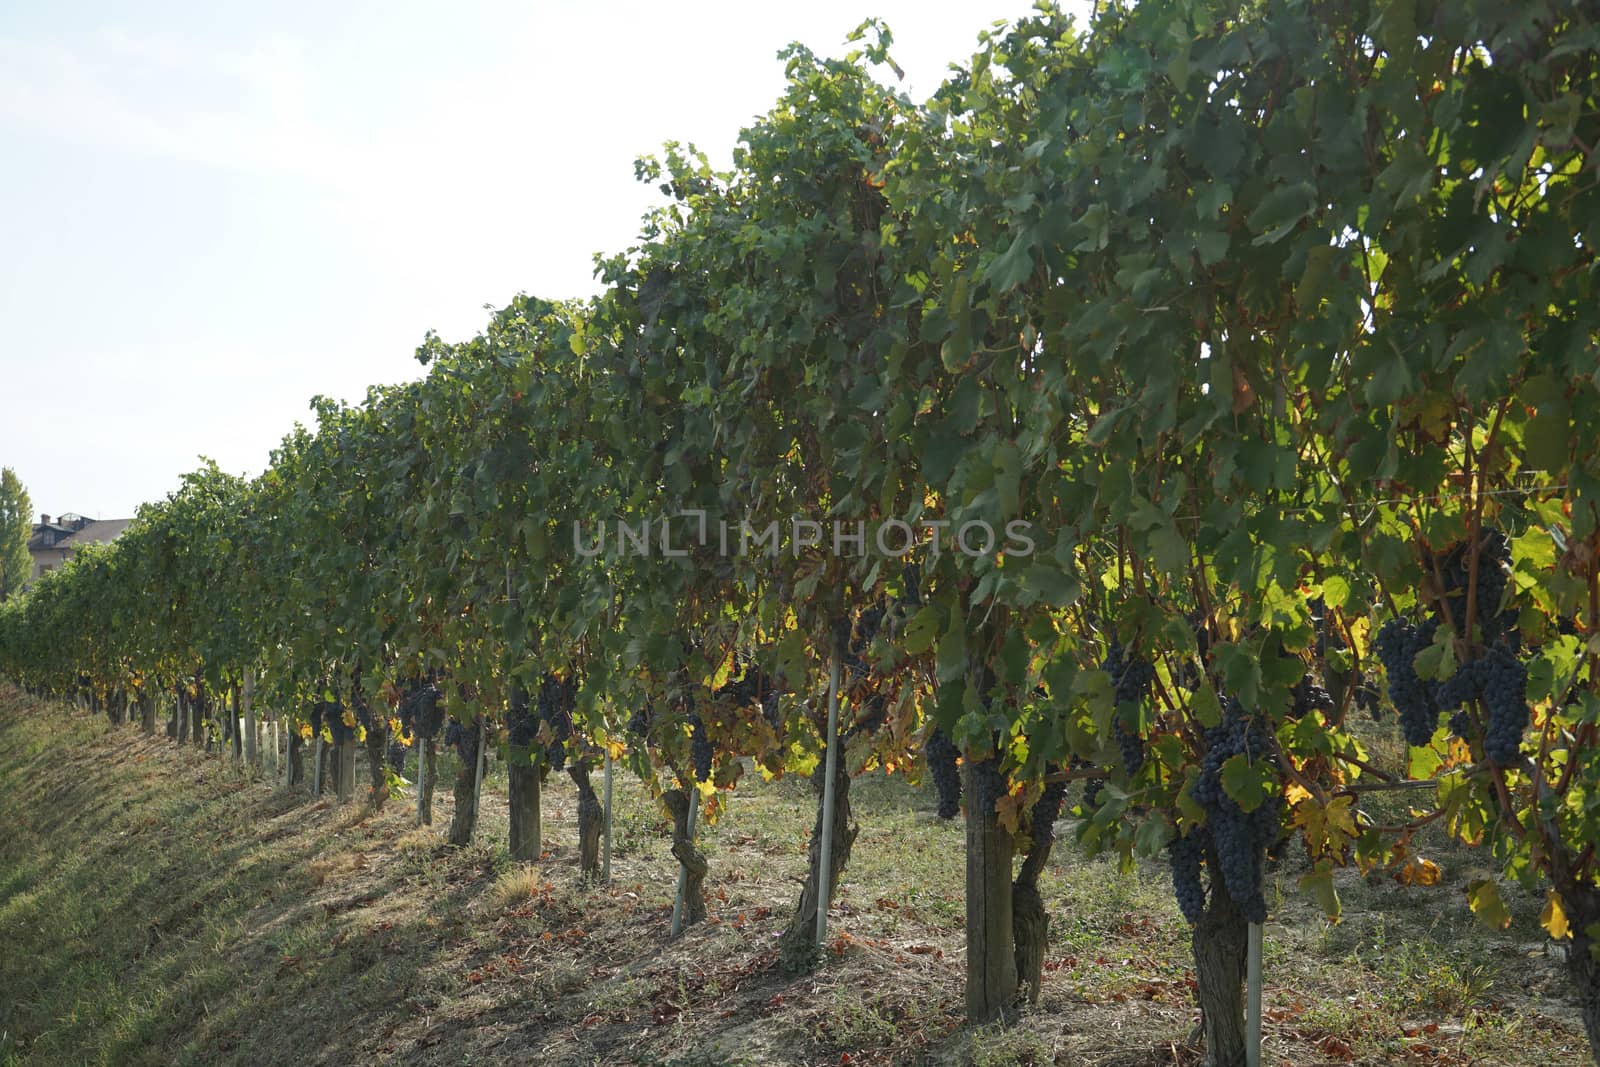 Vineyards waiting for harvest